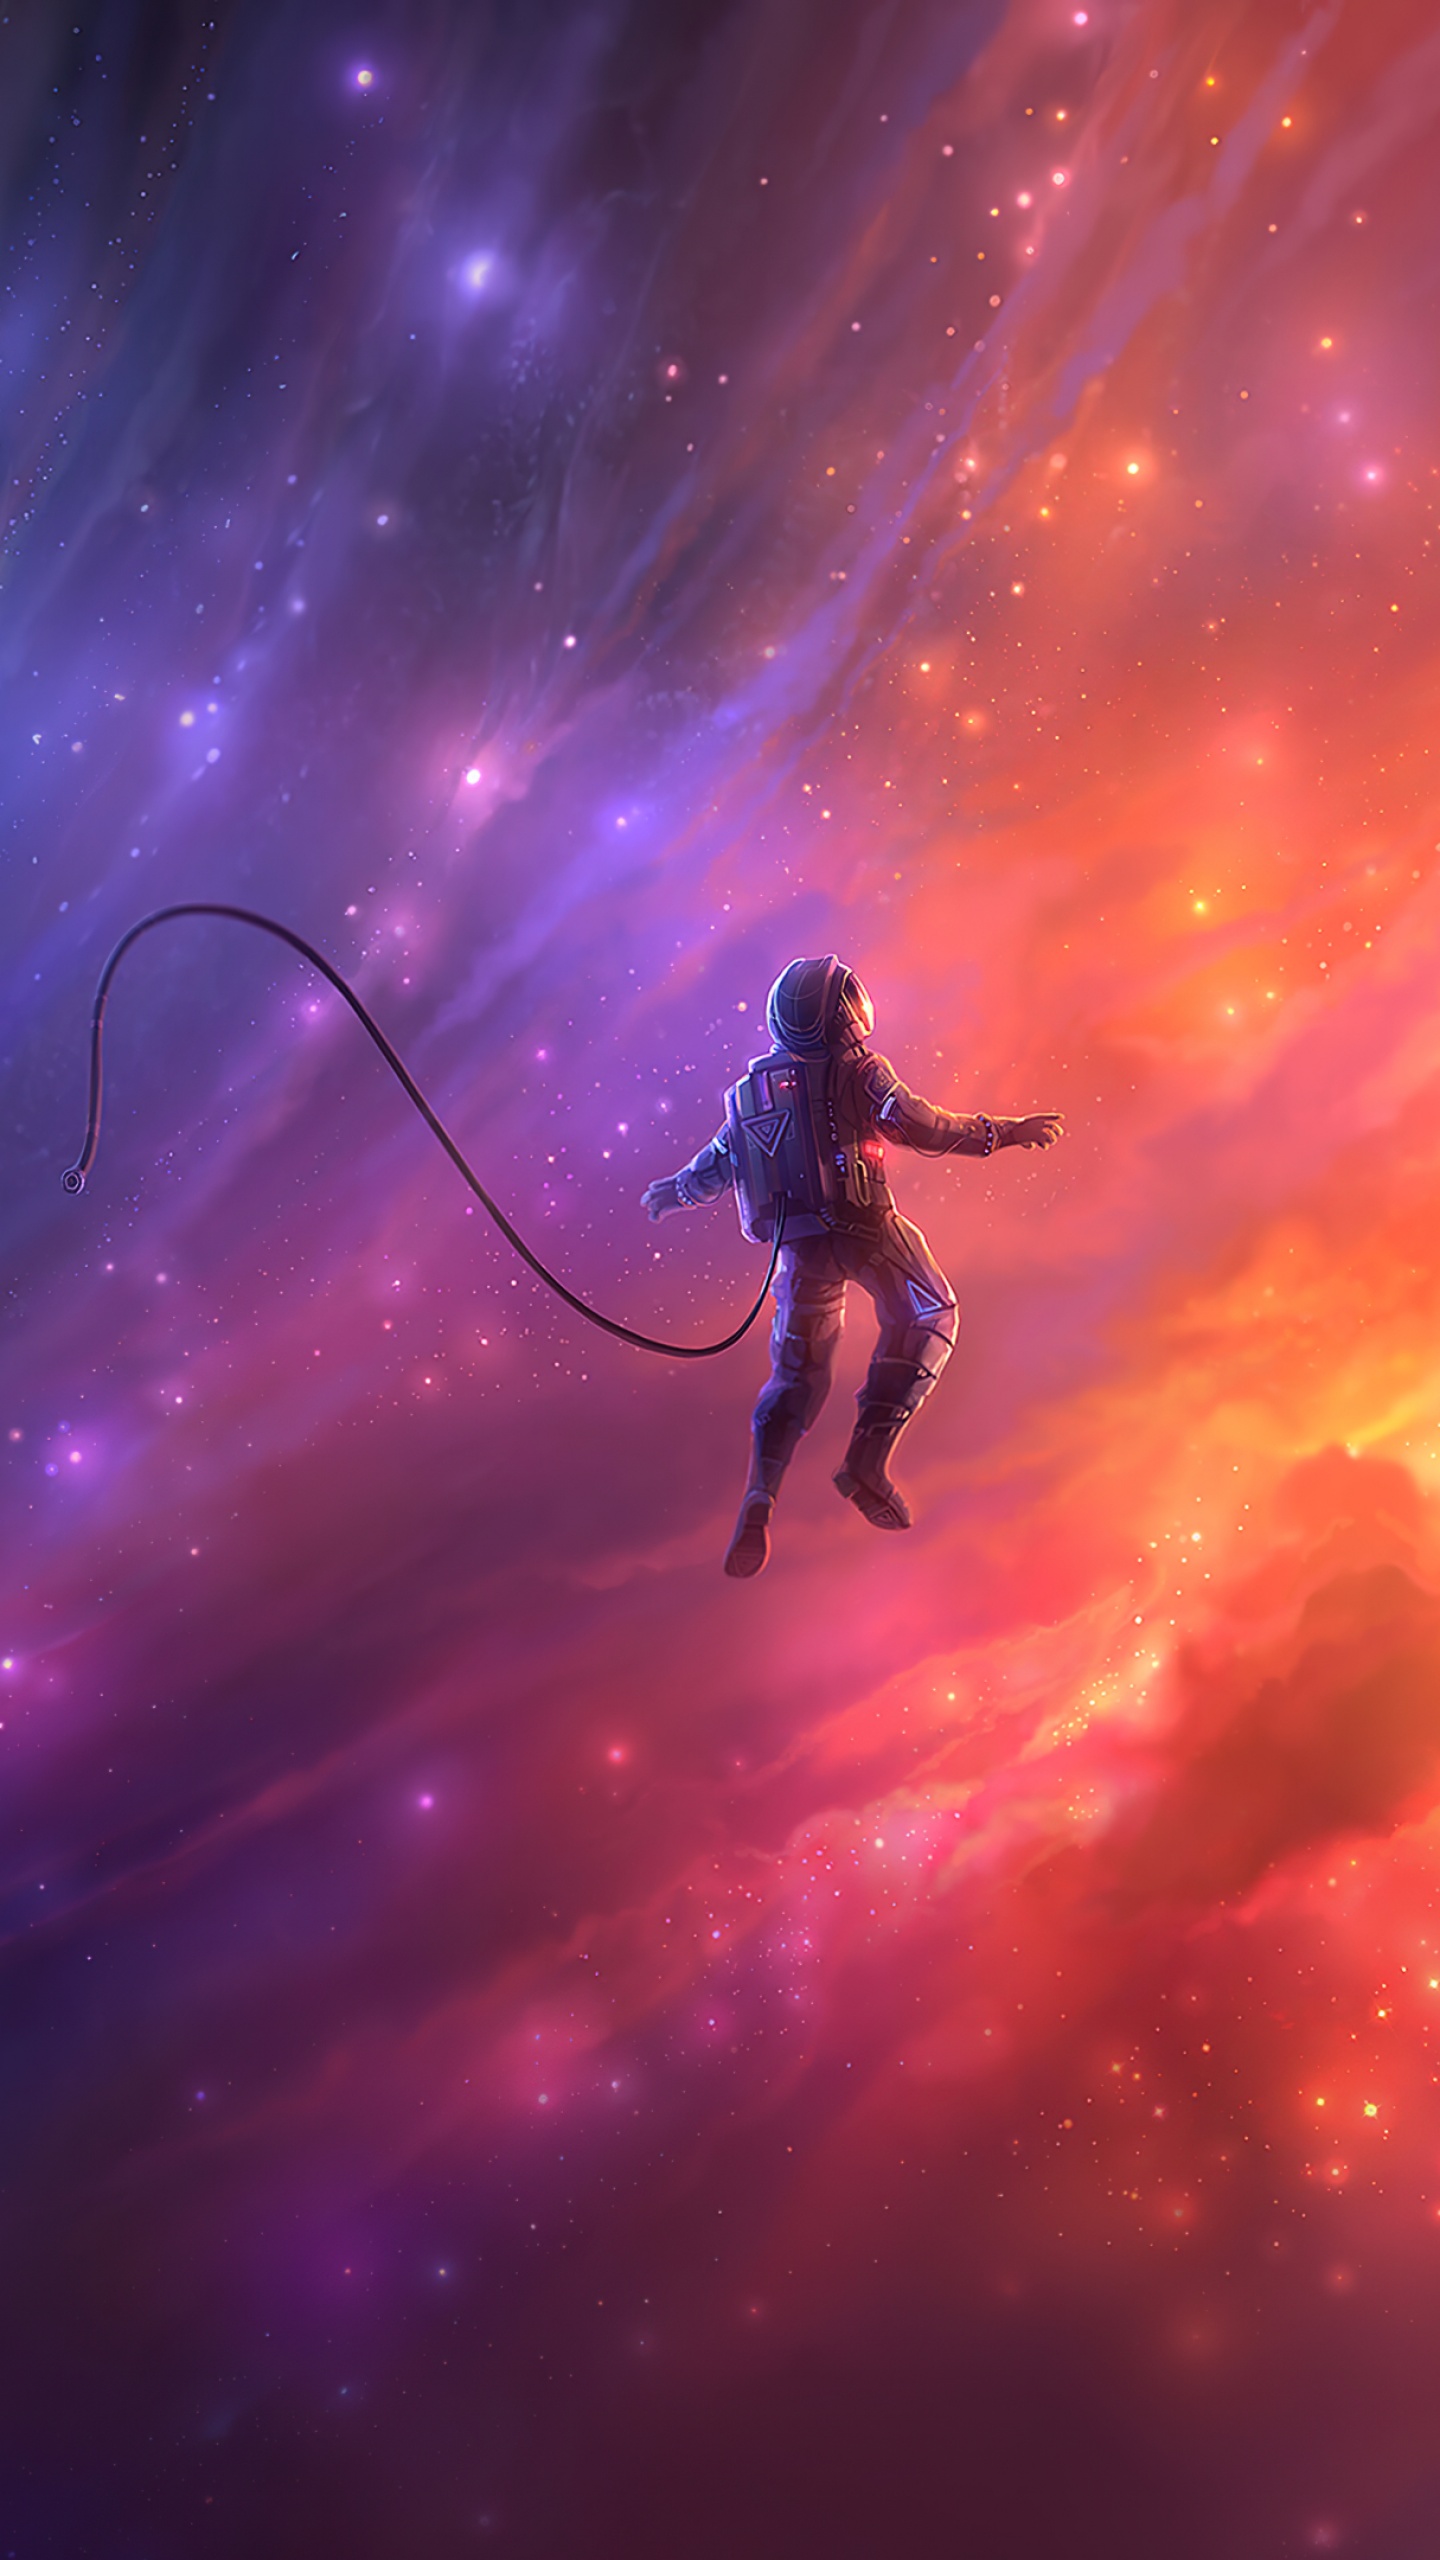 Space Wallpaper 4K, Astronaut, Dream, Galaxy, Astronomy, Surreal, Fantasy